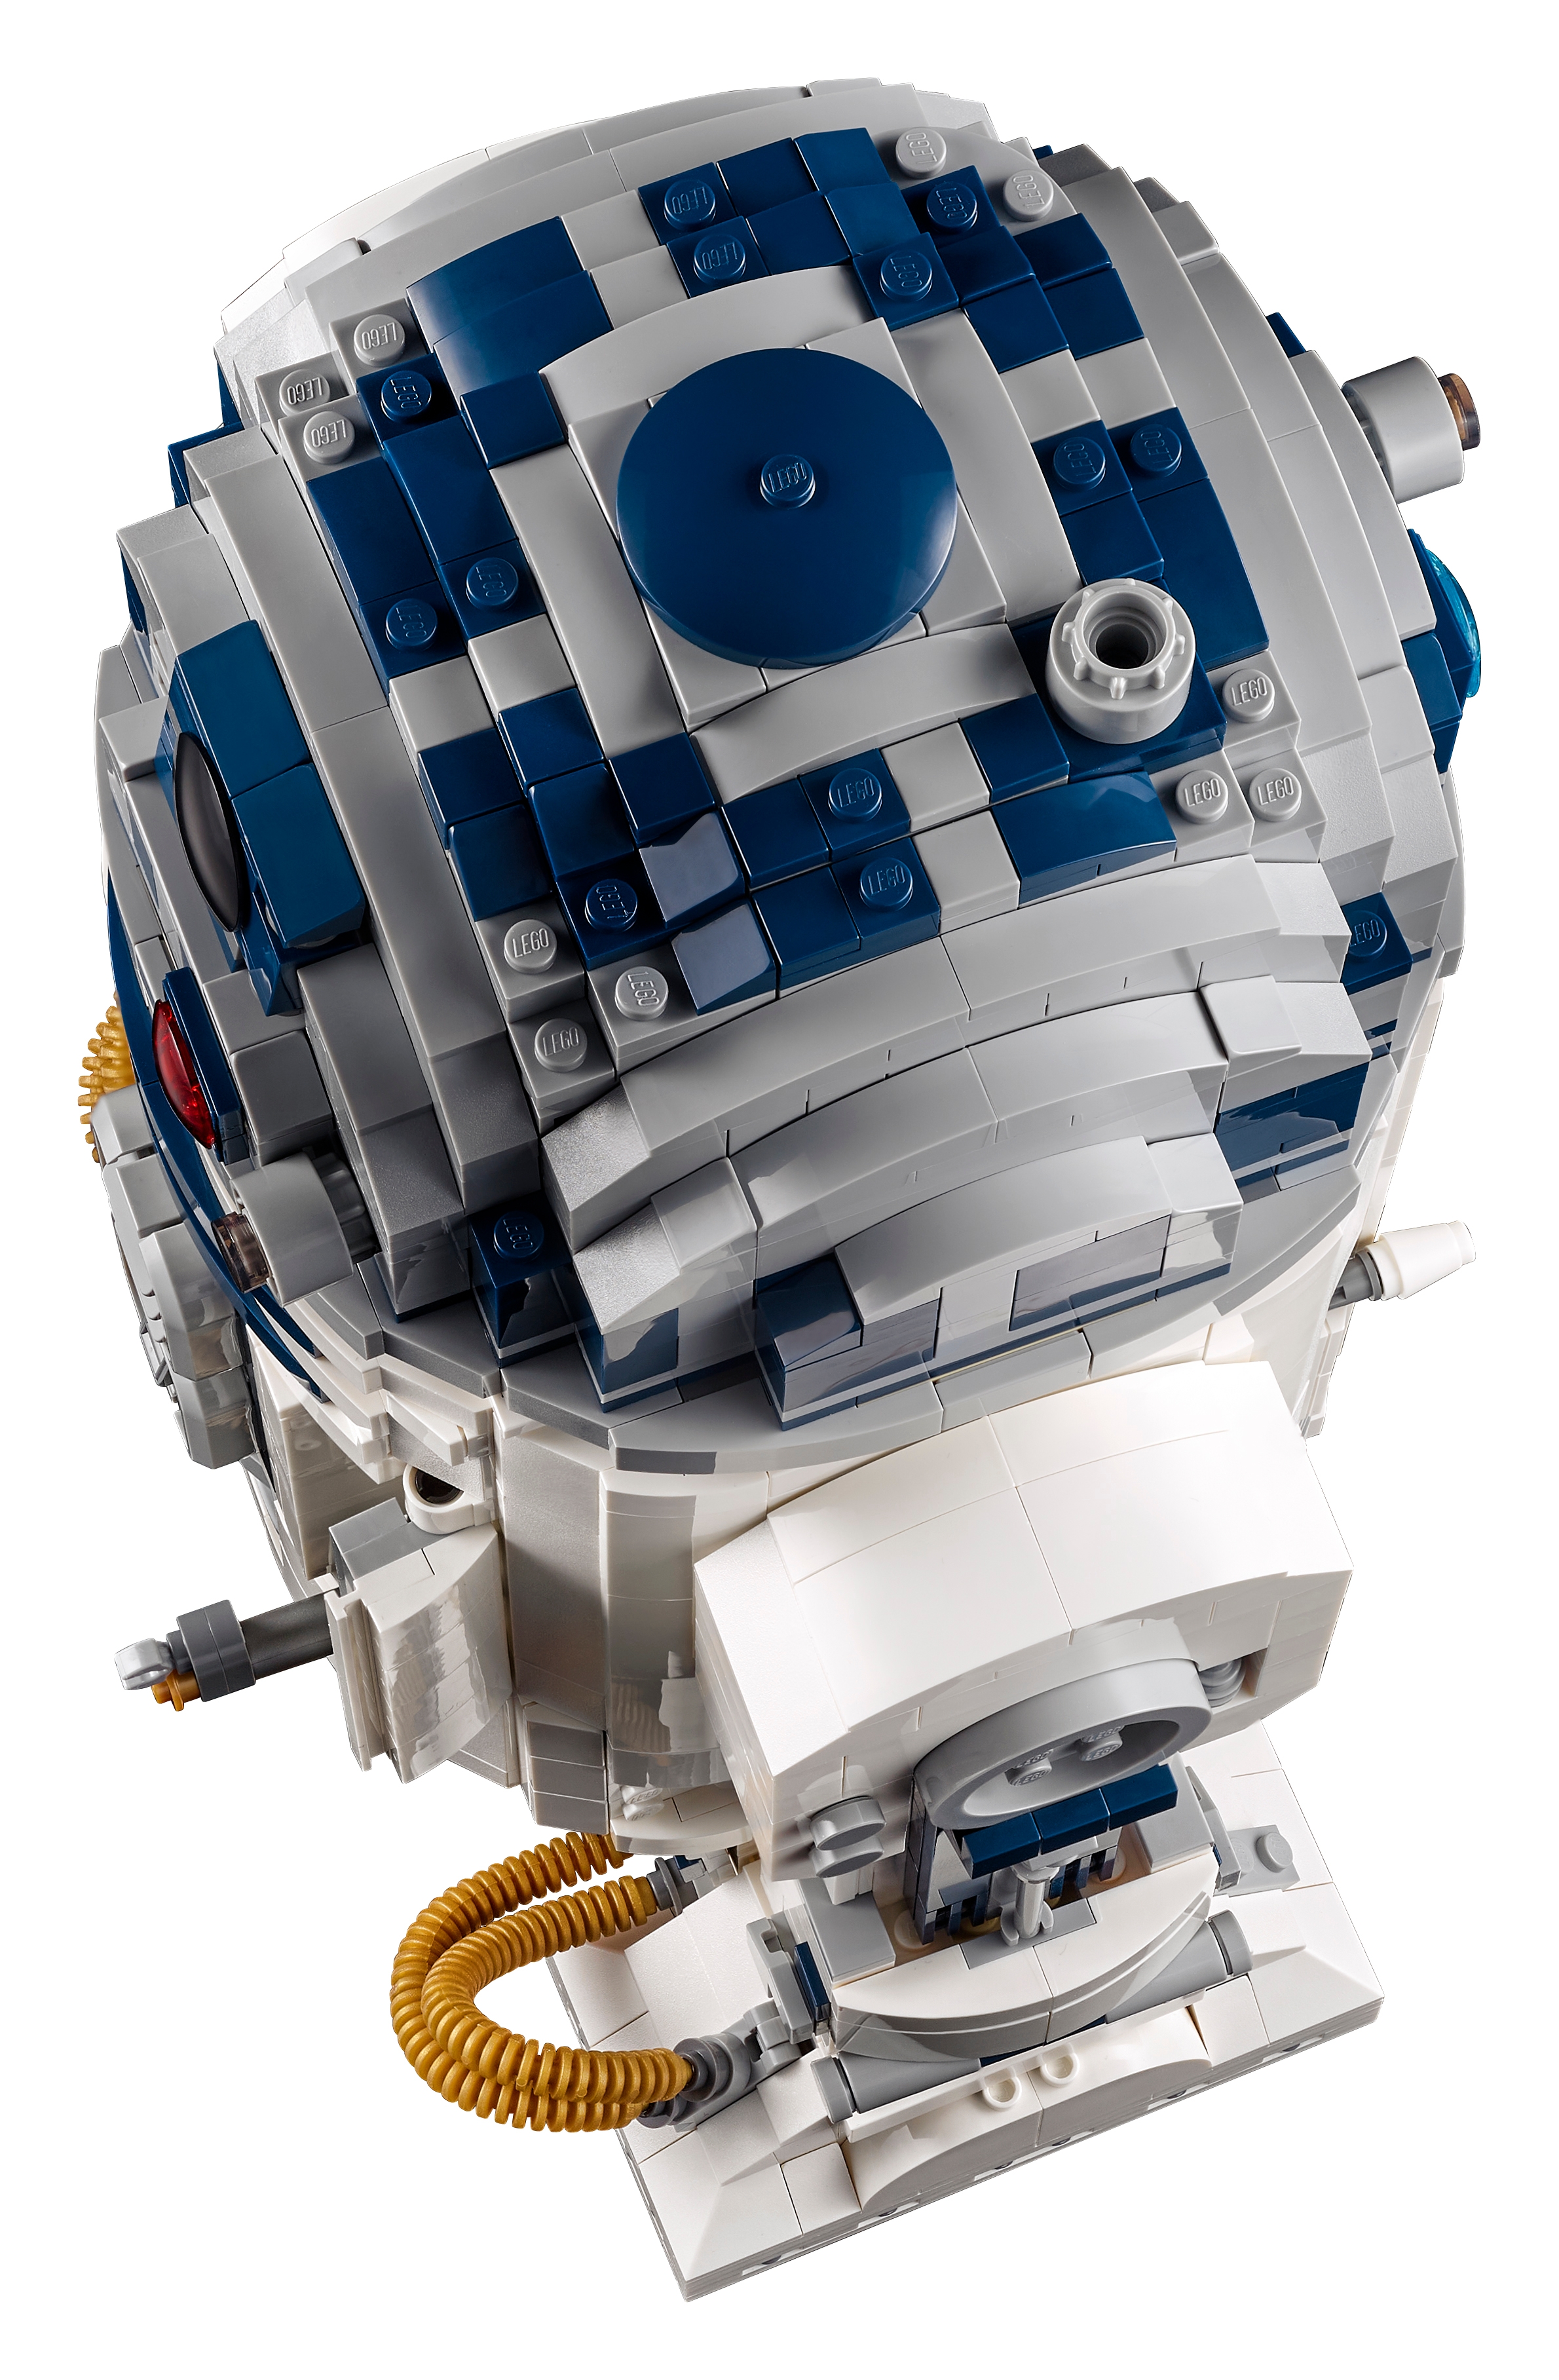 LEGO Star Wars R2-D2 Set 75308 - US